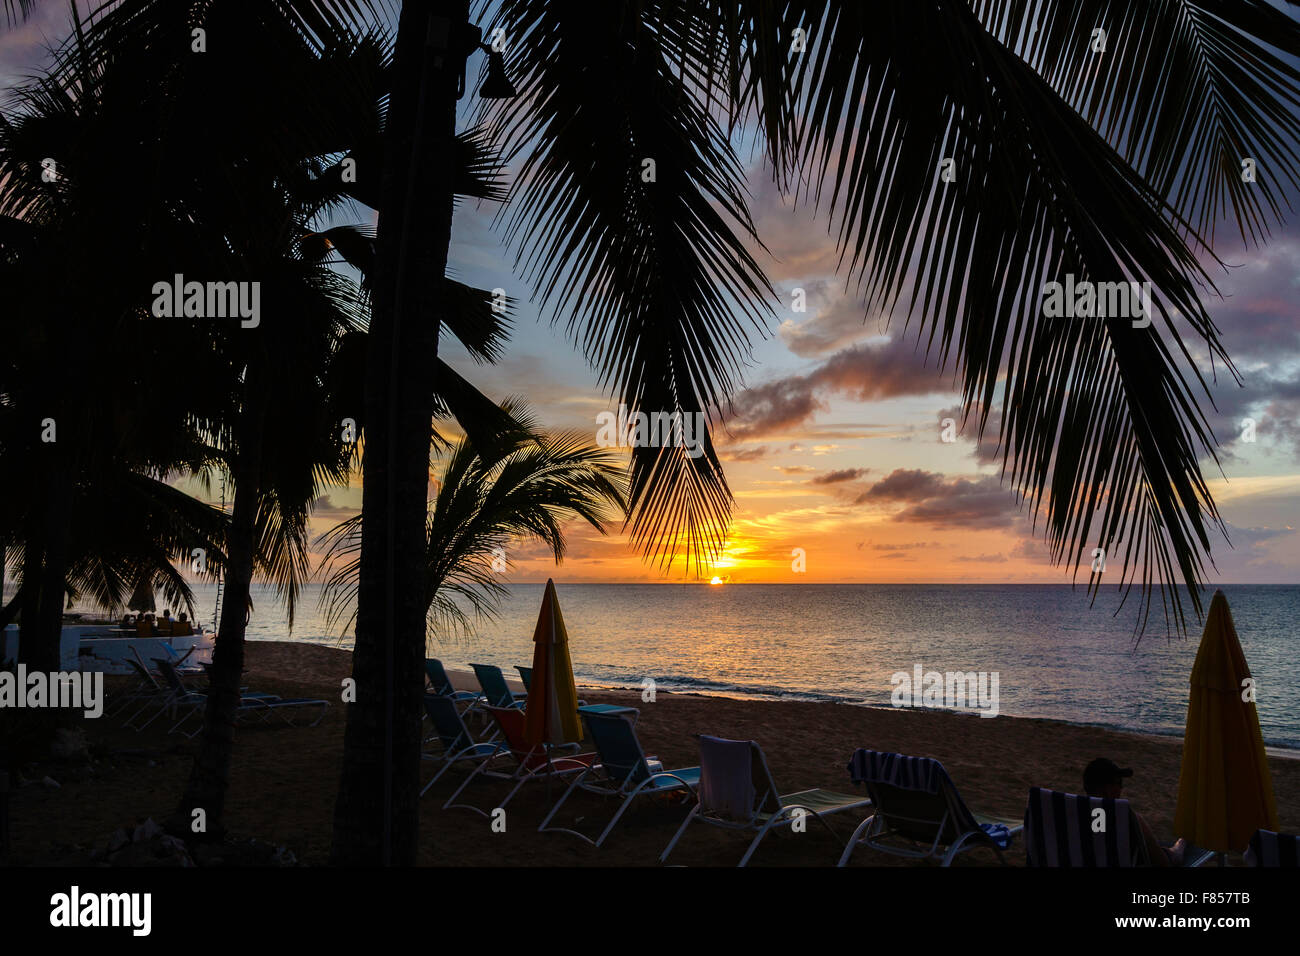 Sunset at a beachside resort, beach chairs, palm trees, Caribbean Sea in St. Croix, U.S. Virgin Islands. Stock Photo